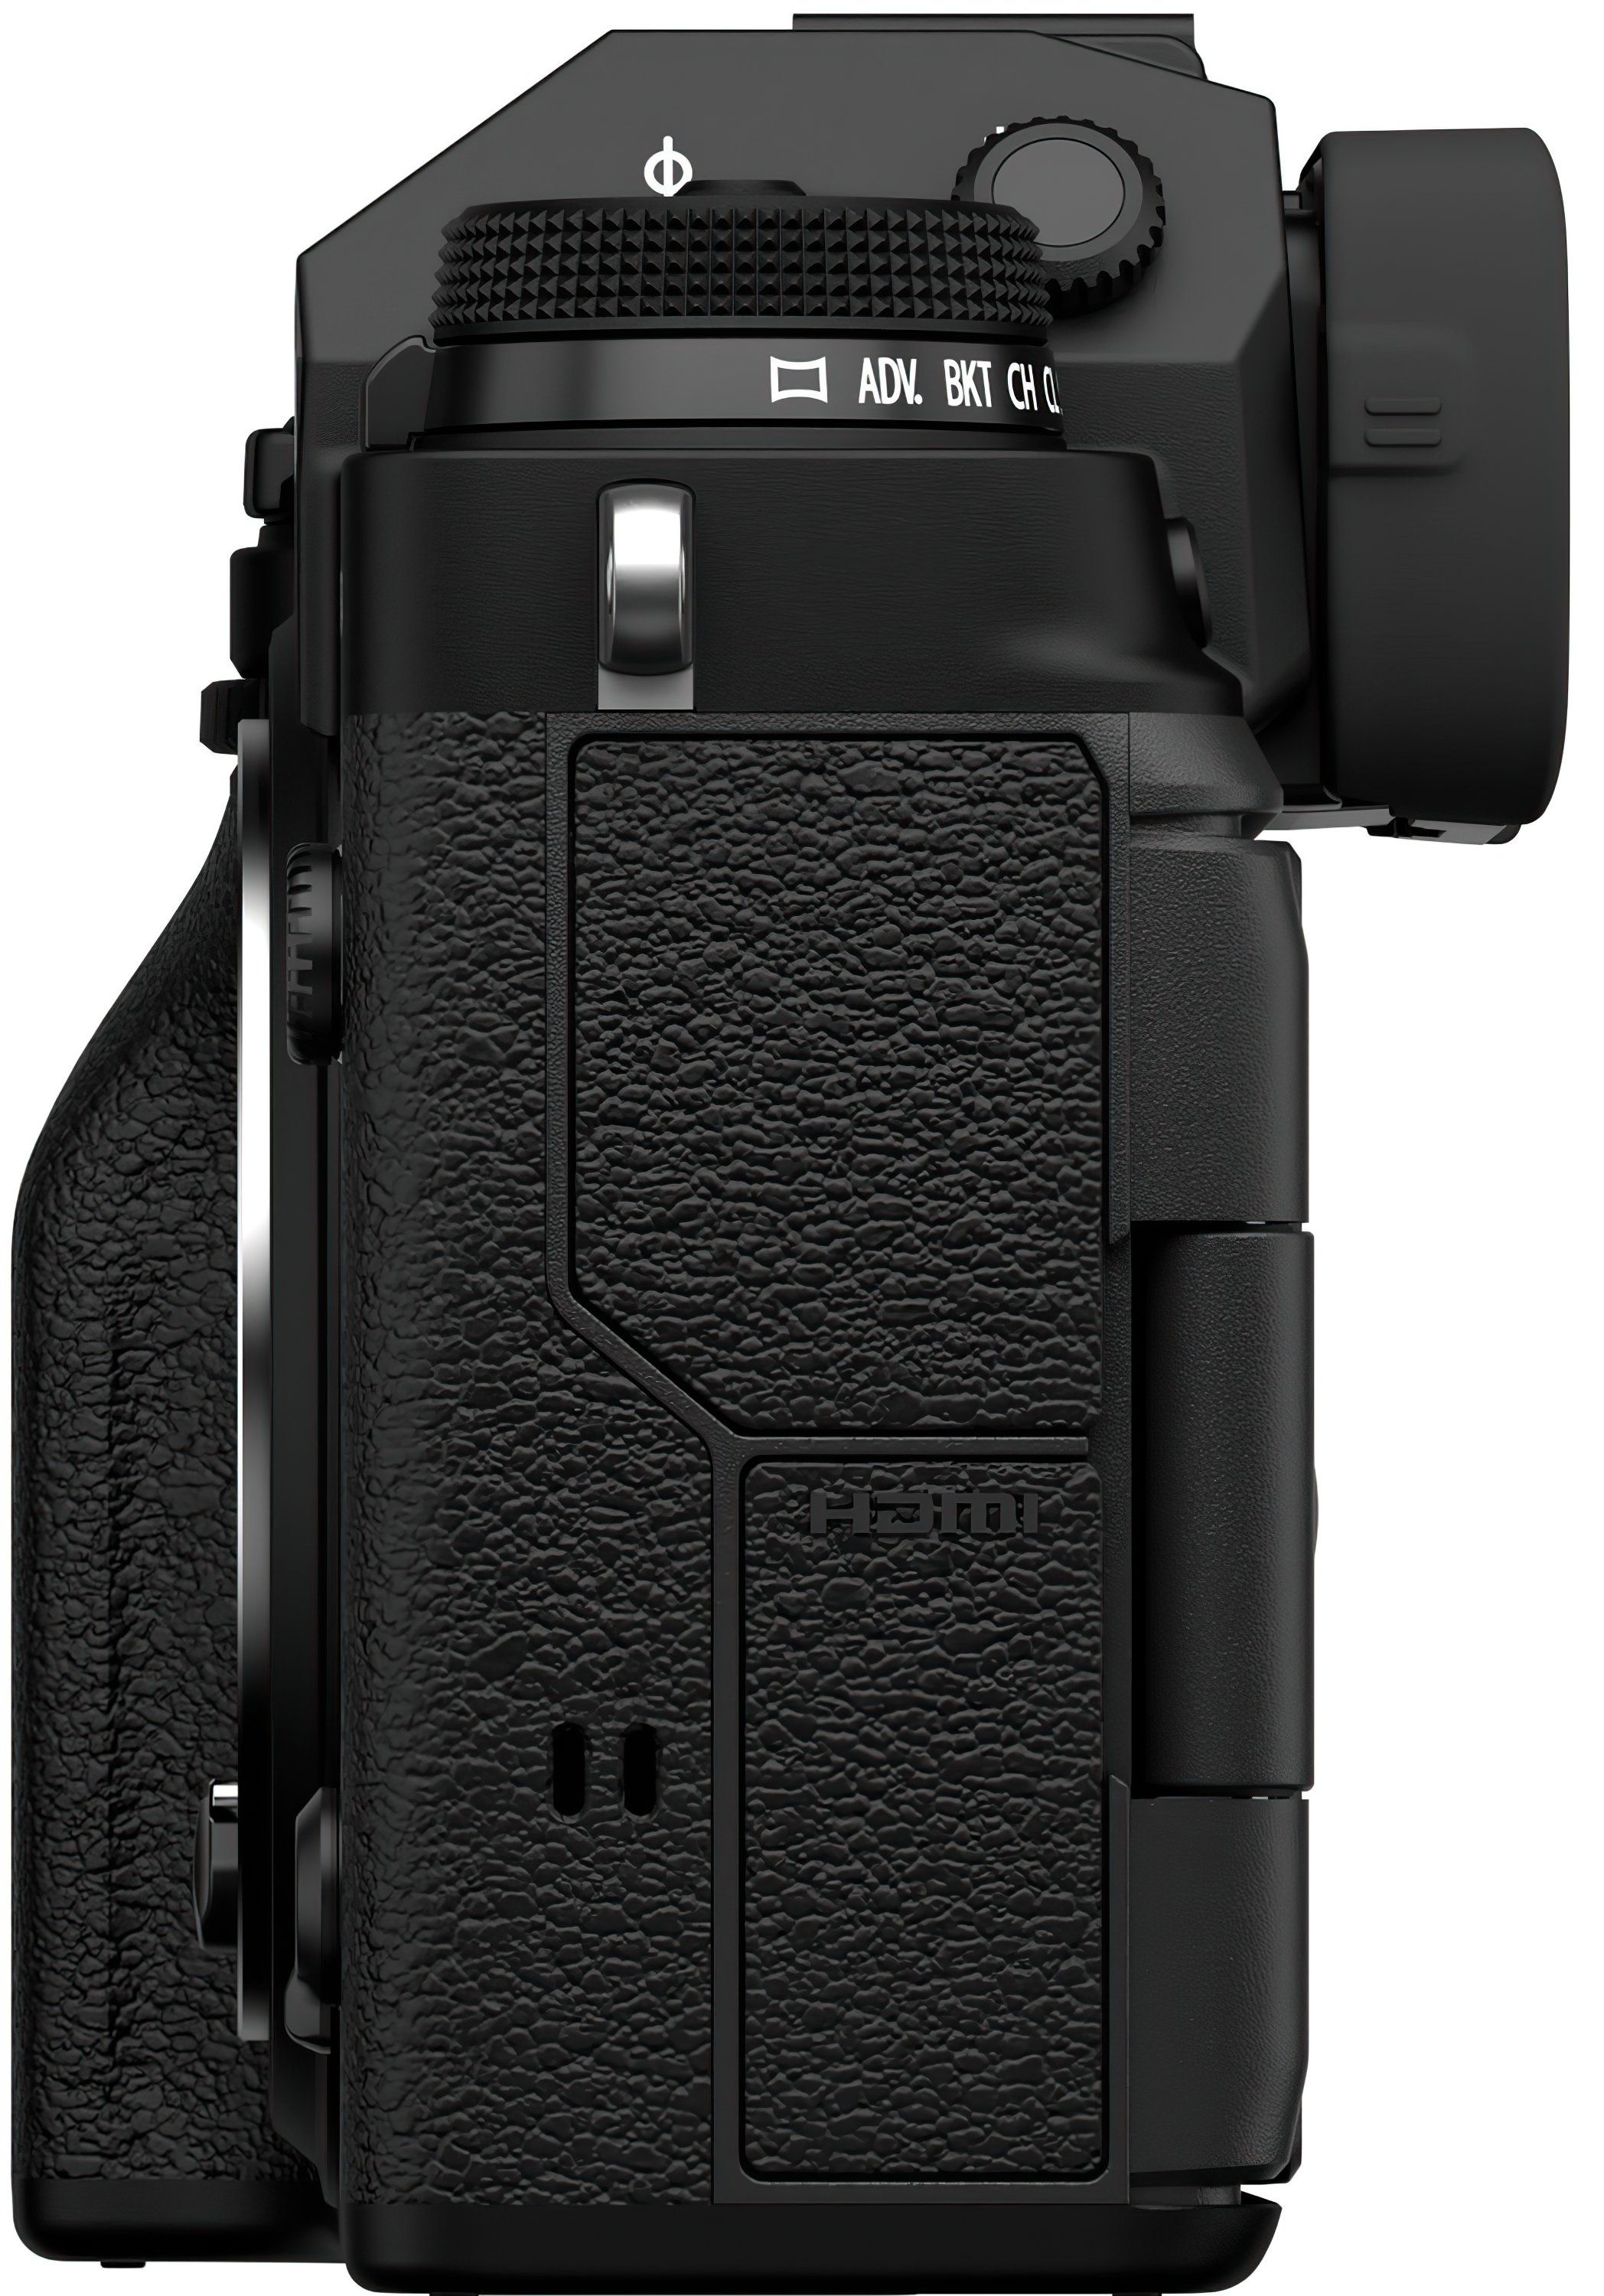 Фотоаппарат Fujifilm X-T4 Body Black (РСТ)